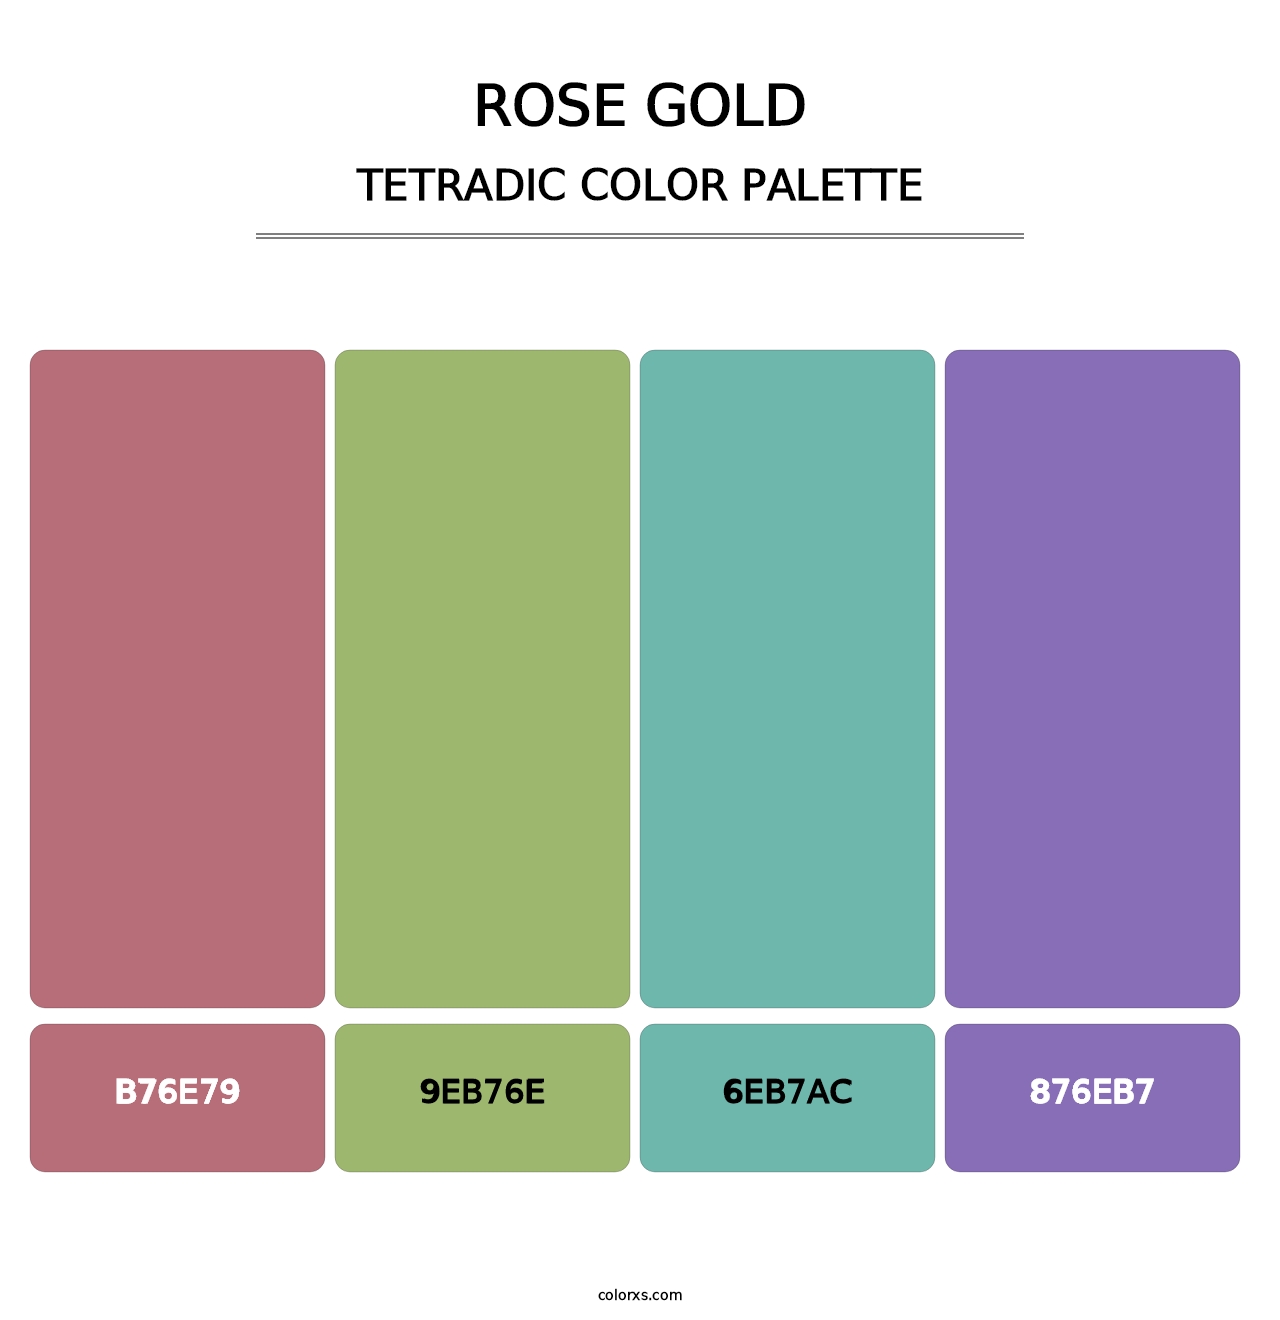 Rose Gold - Tetradic Color Palette